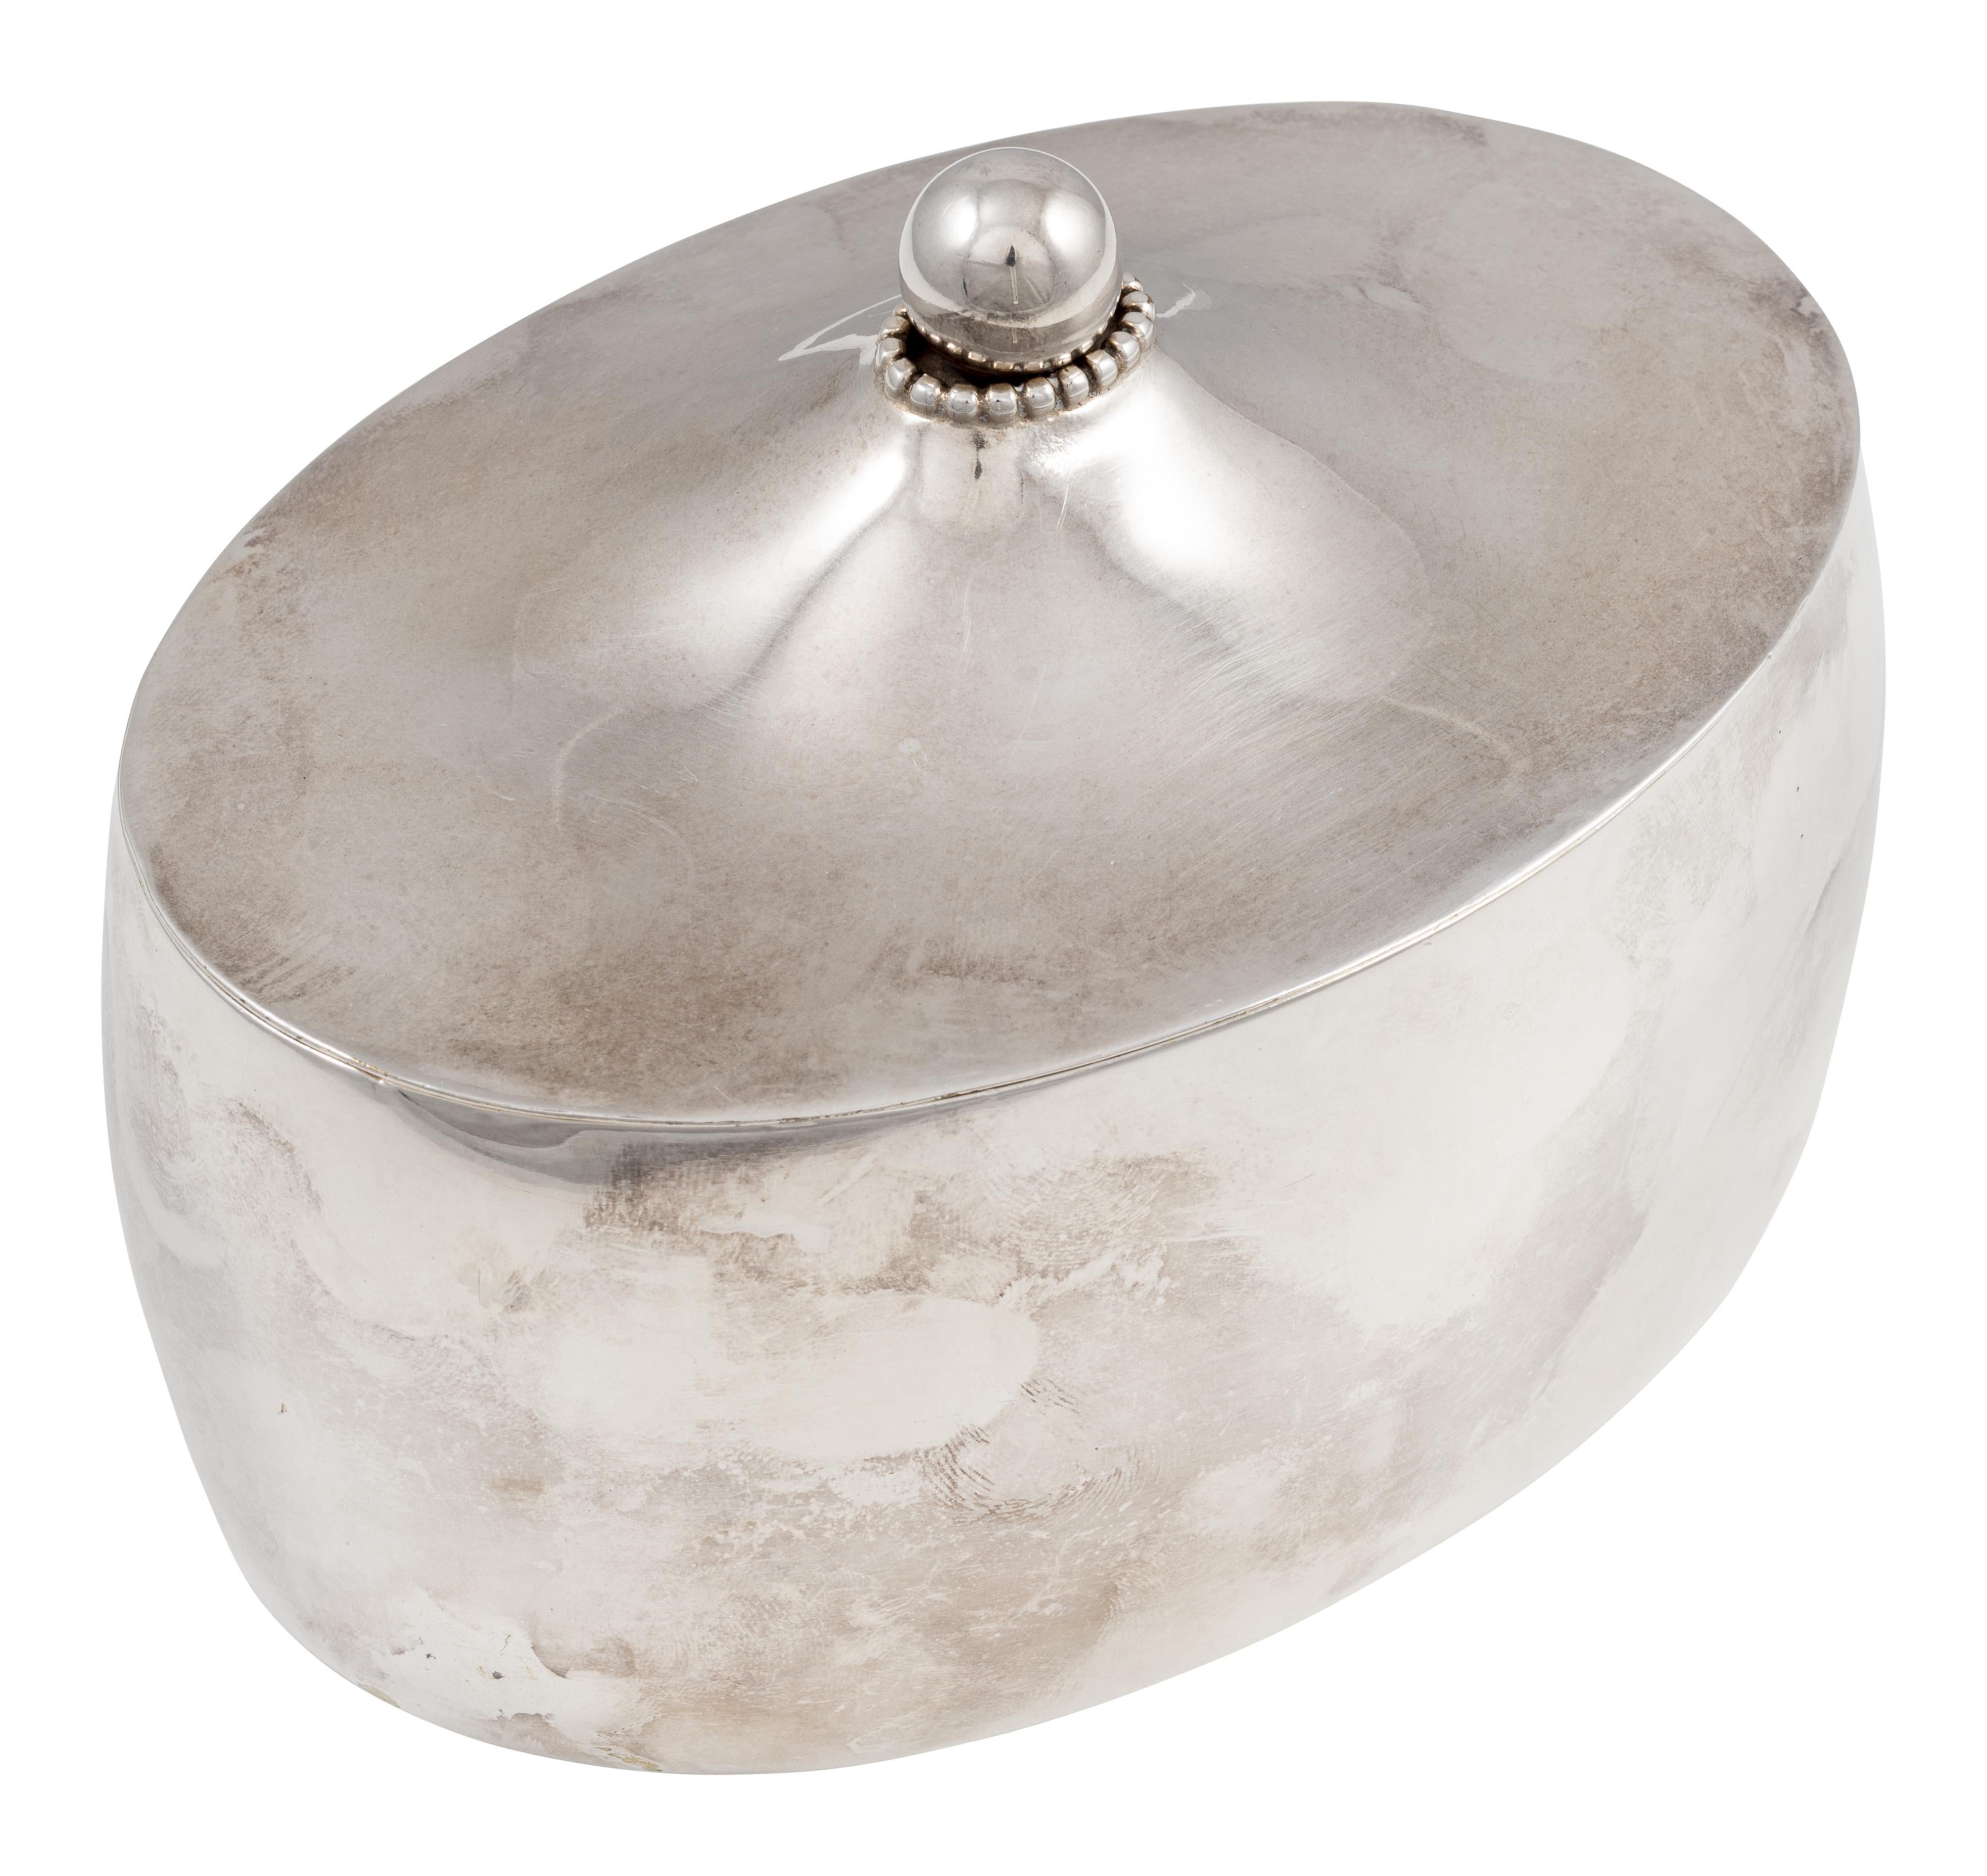 Austrian Jugendstil sugar bowl designed by Josef Hoffmann white brass silver-plated 1910 manufactured by Wiener Werkstatte

Josef Hoffmann, co-founder of the Wiener Werkstatte, was an extremely productive and versatile designer. In his designs, he